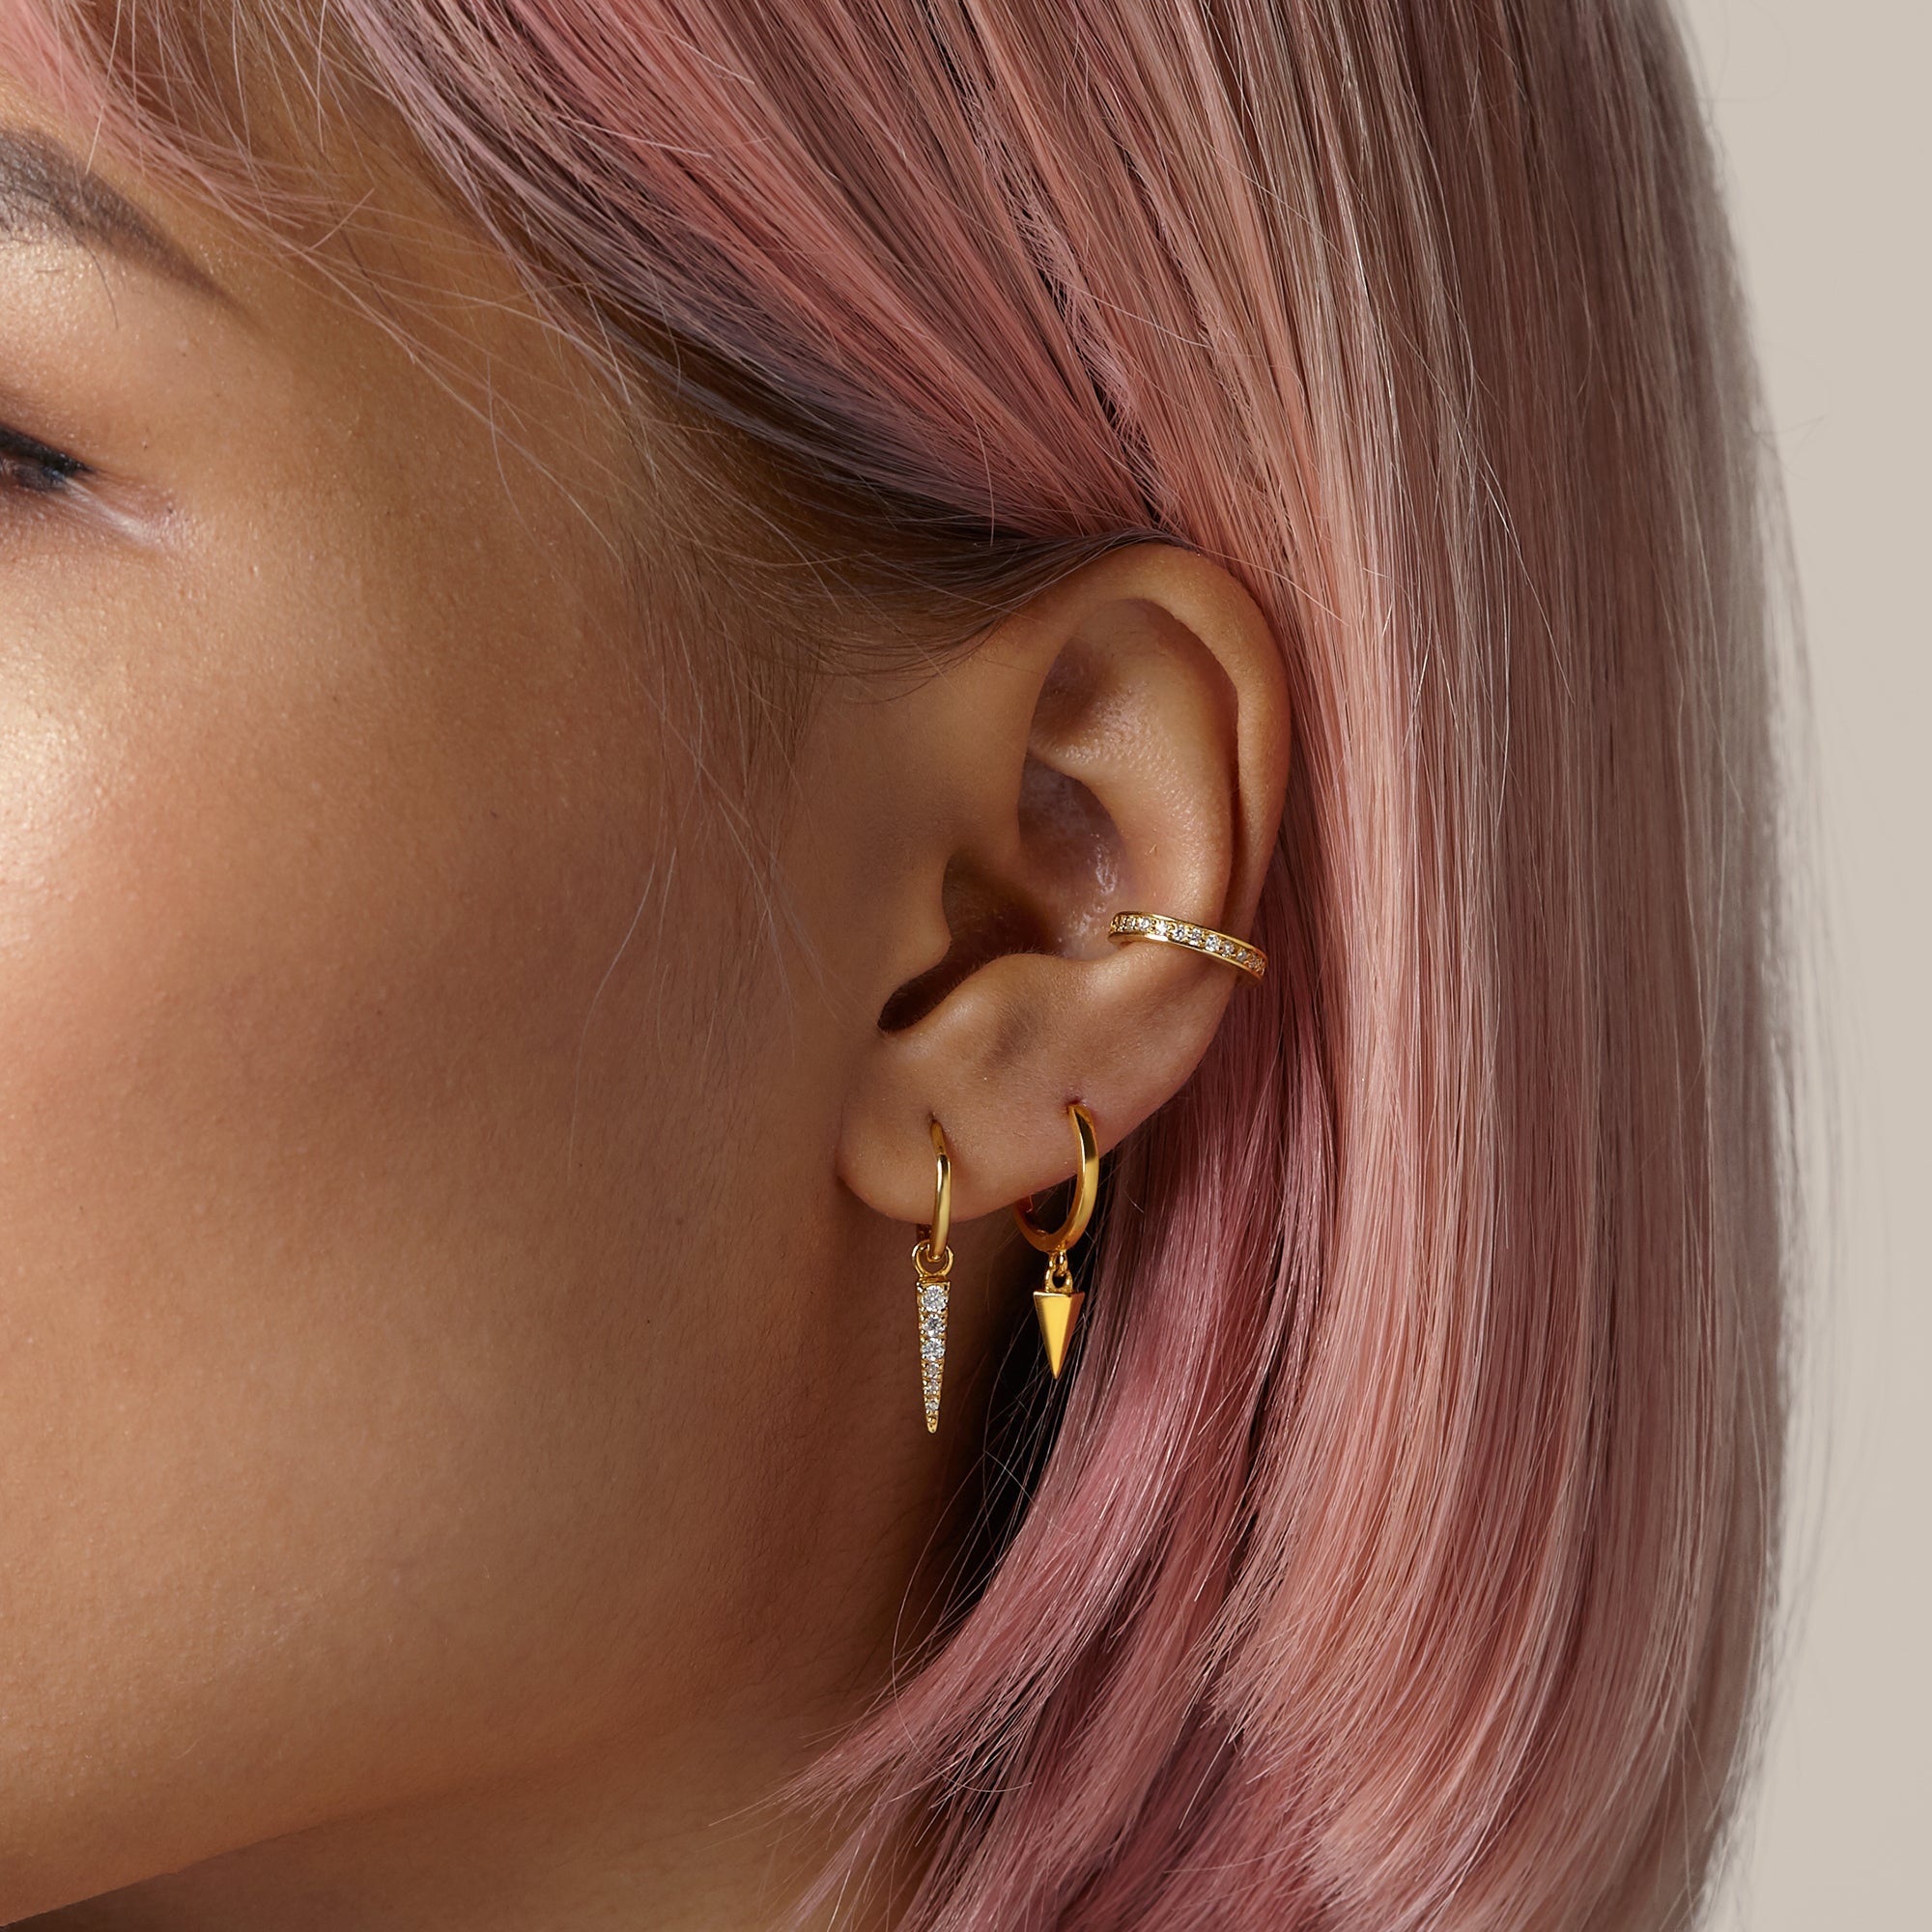 925 Sterling Silver Pyramid Charm Hoop Earrings - Versatile and Safe for Sensitive Skin Bijou Her